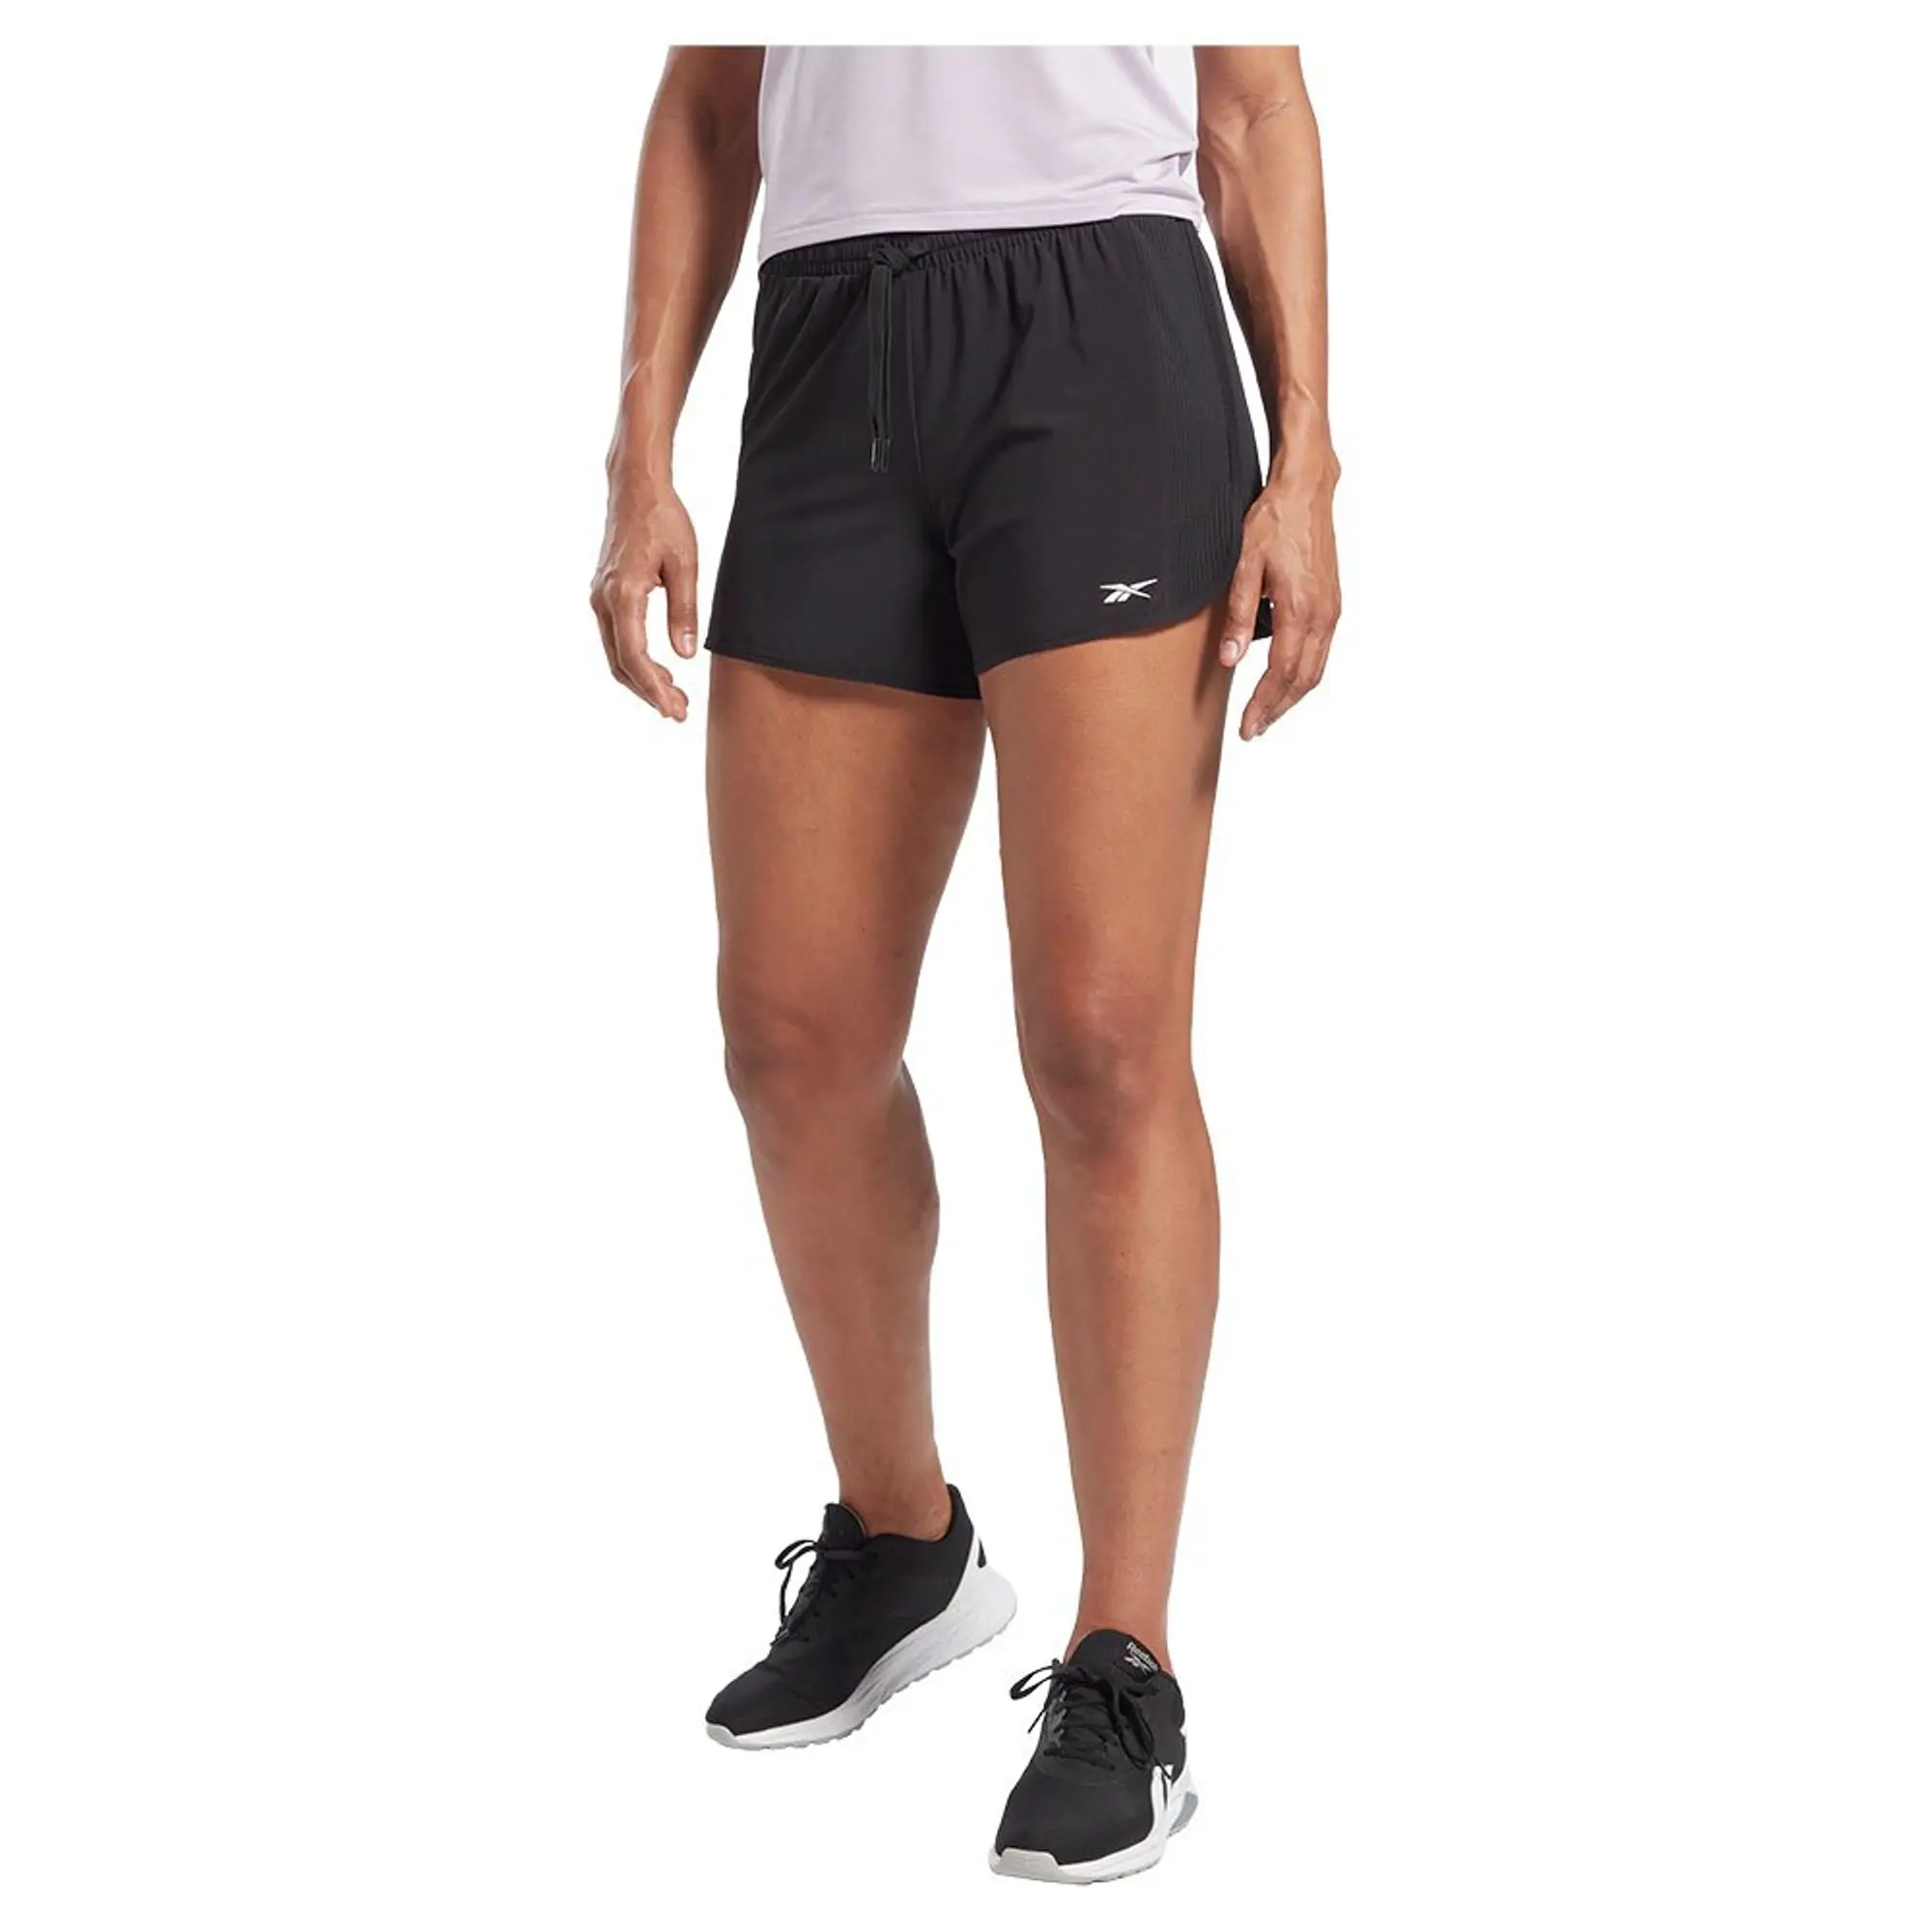 Reebok Athlete Shorts  - Black